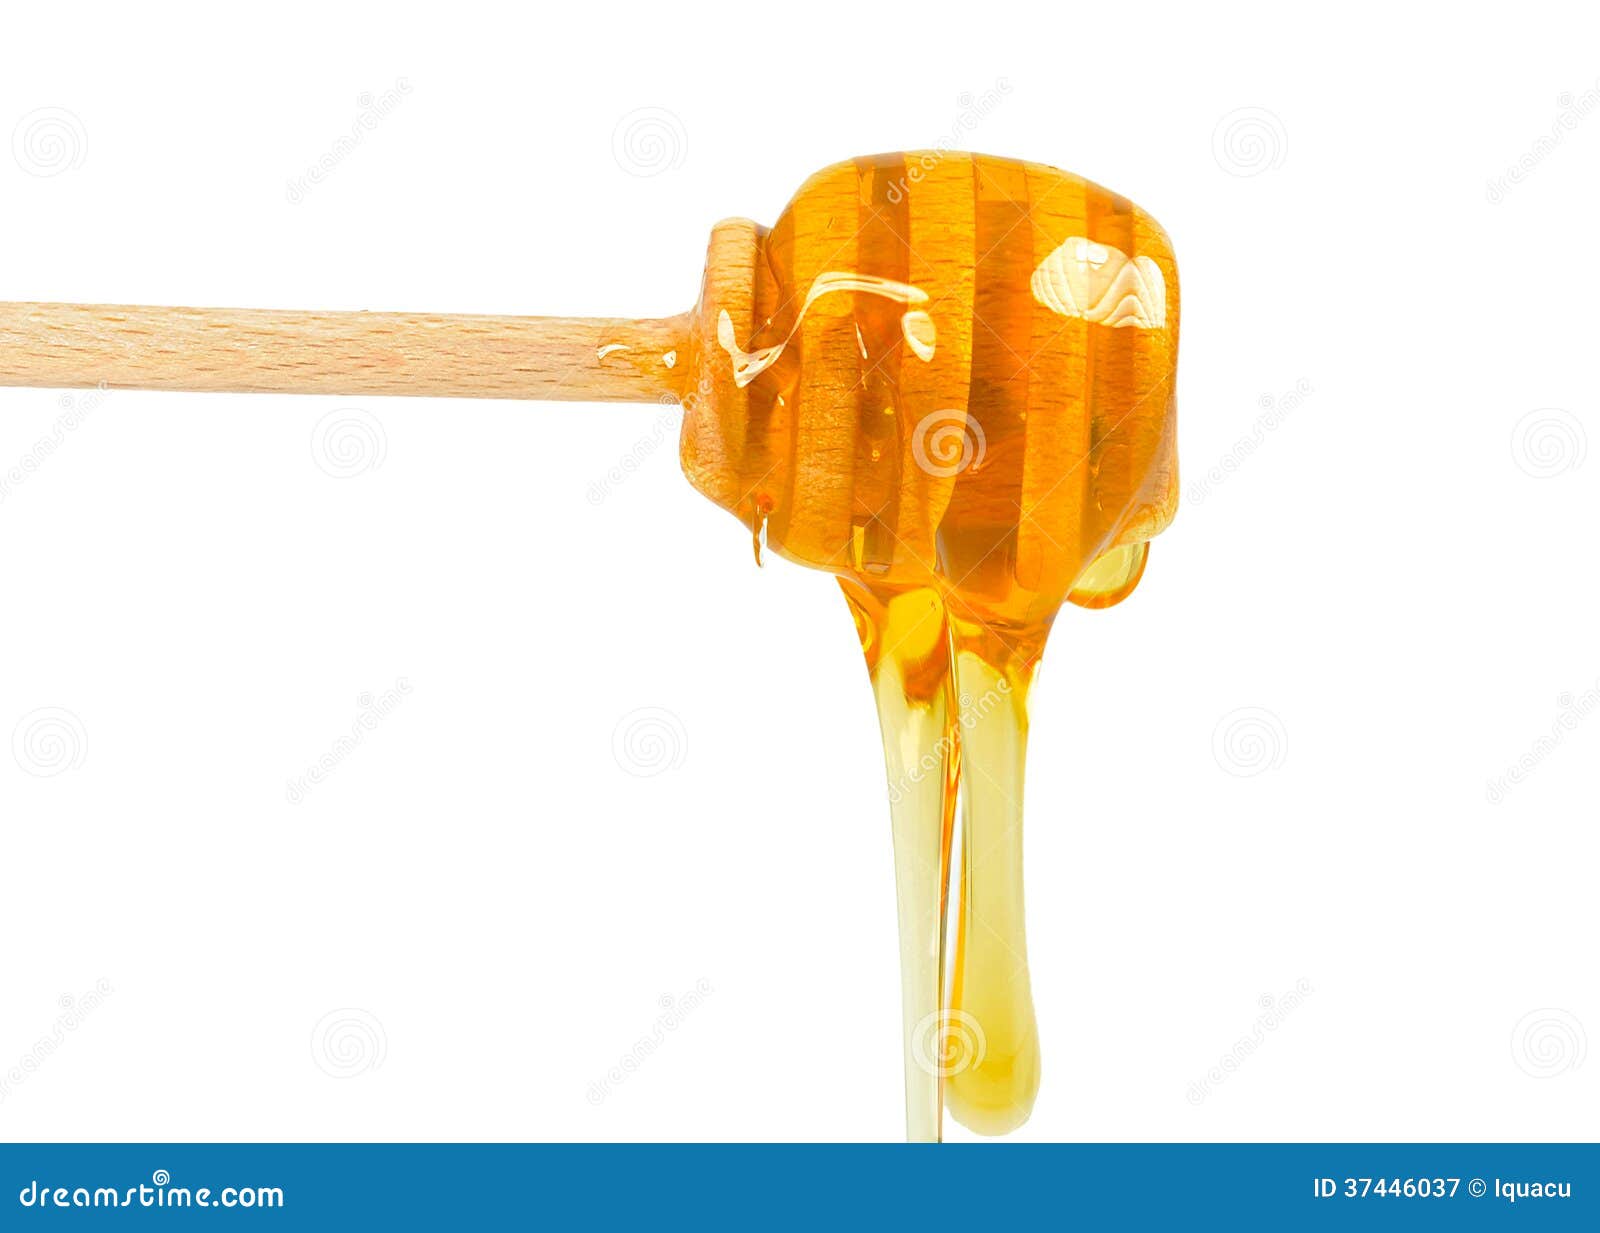 honey dripping clipart - photo #46